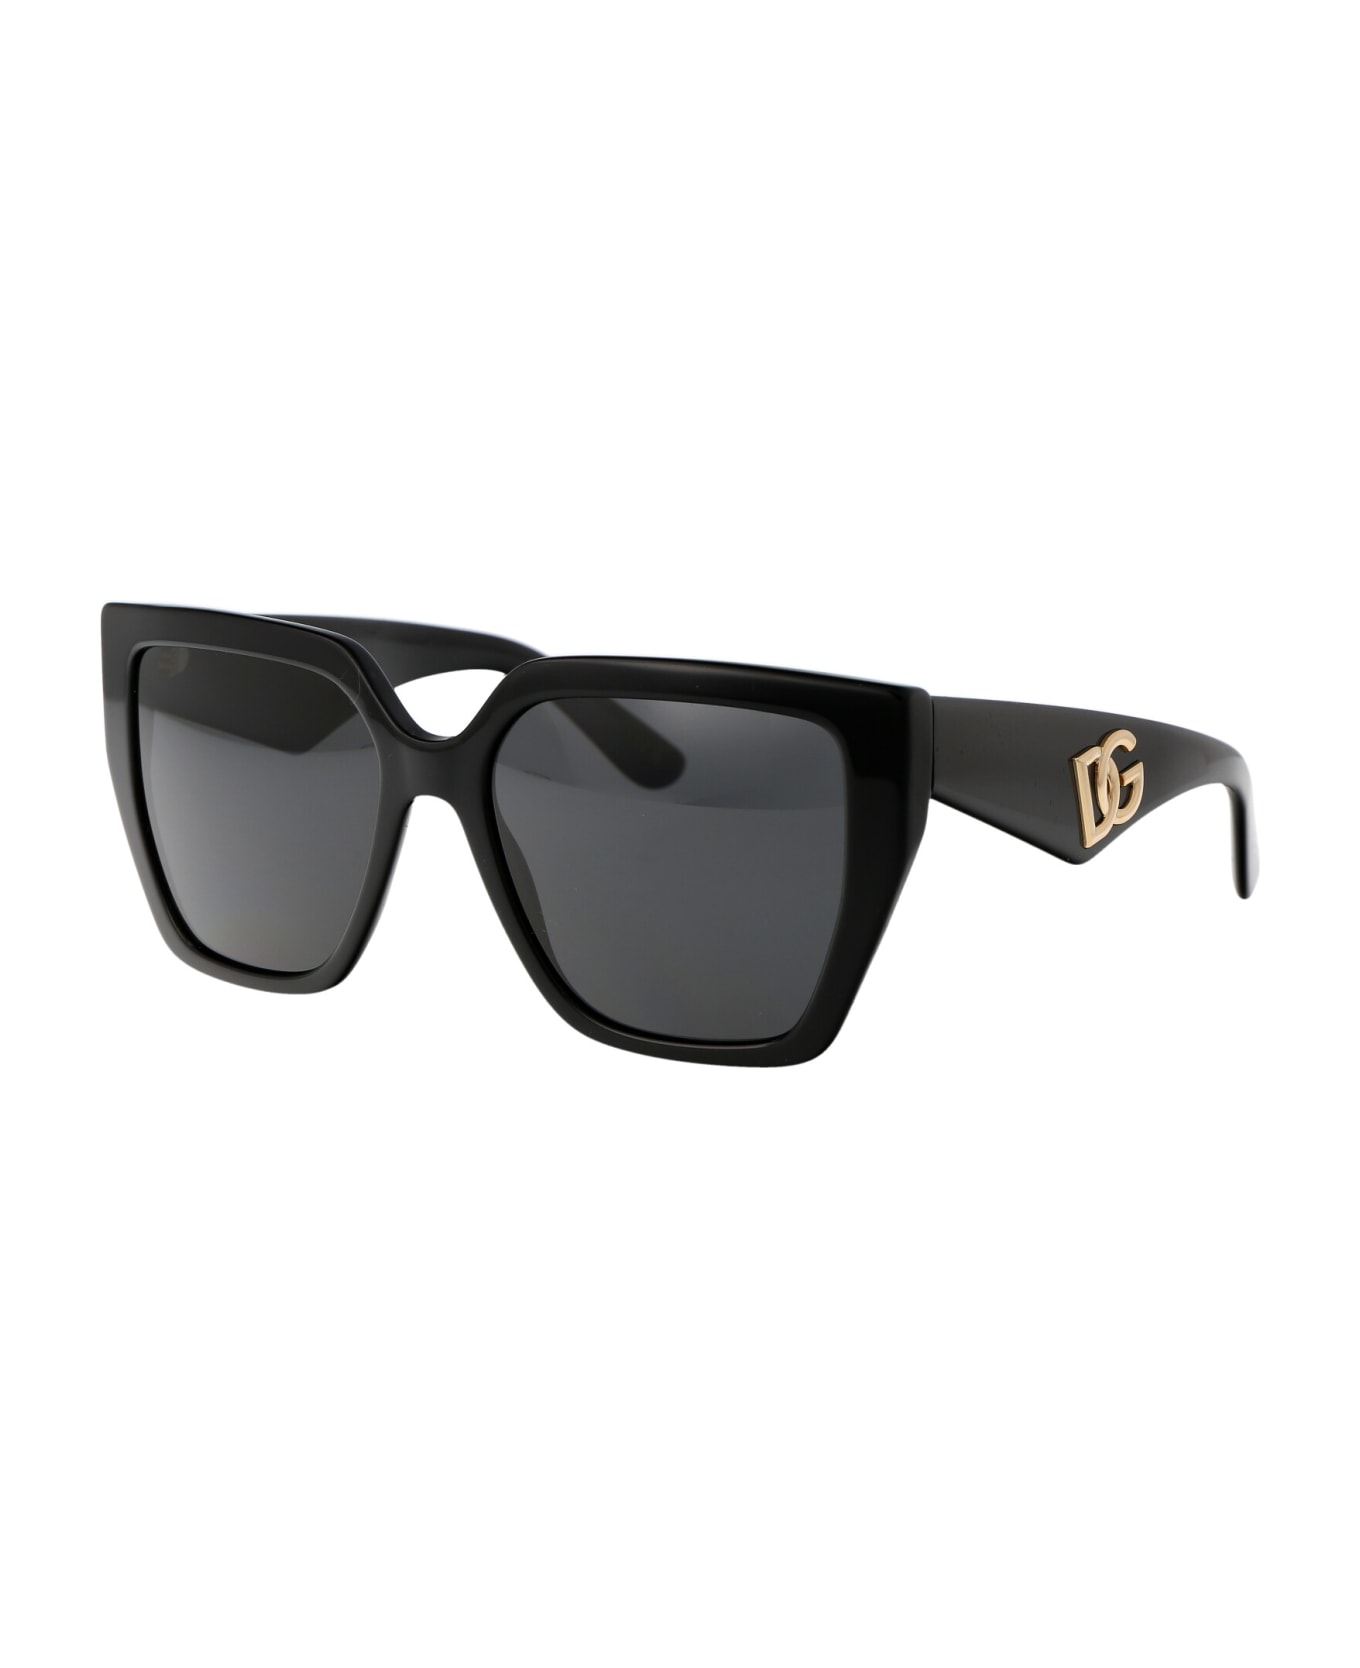 Dolce & Gabbana Eyewear 0dg4438 Sunglasses - 501/87 BLACK